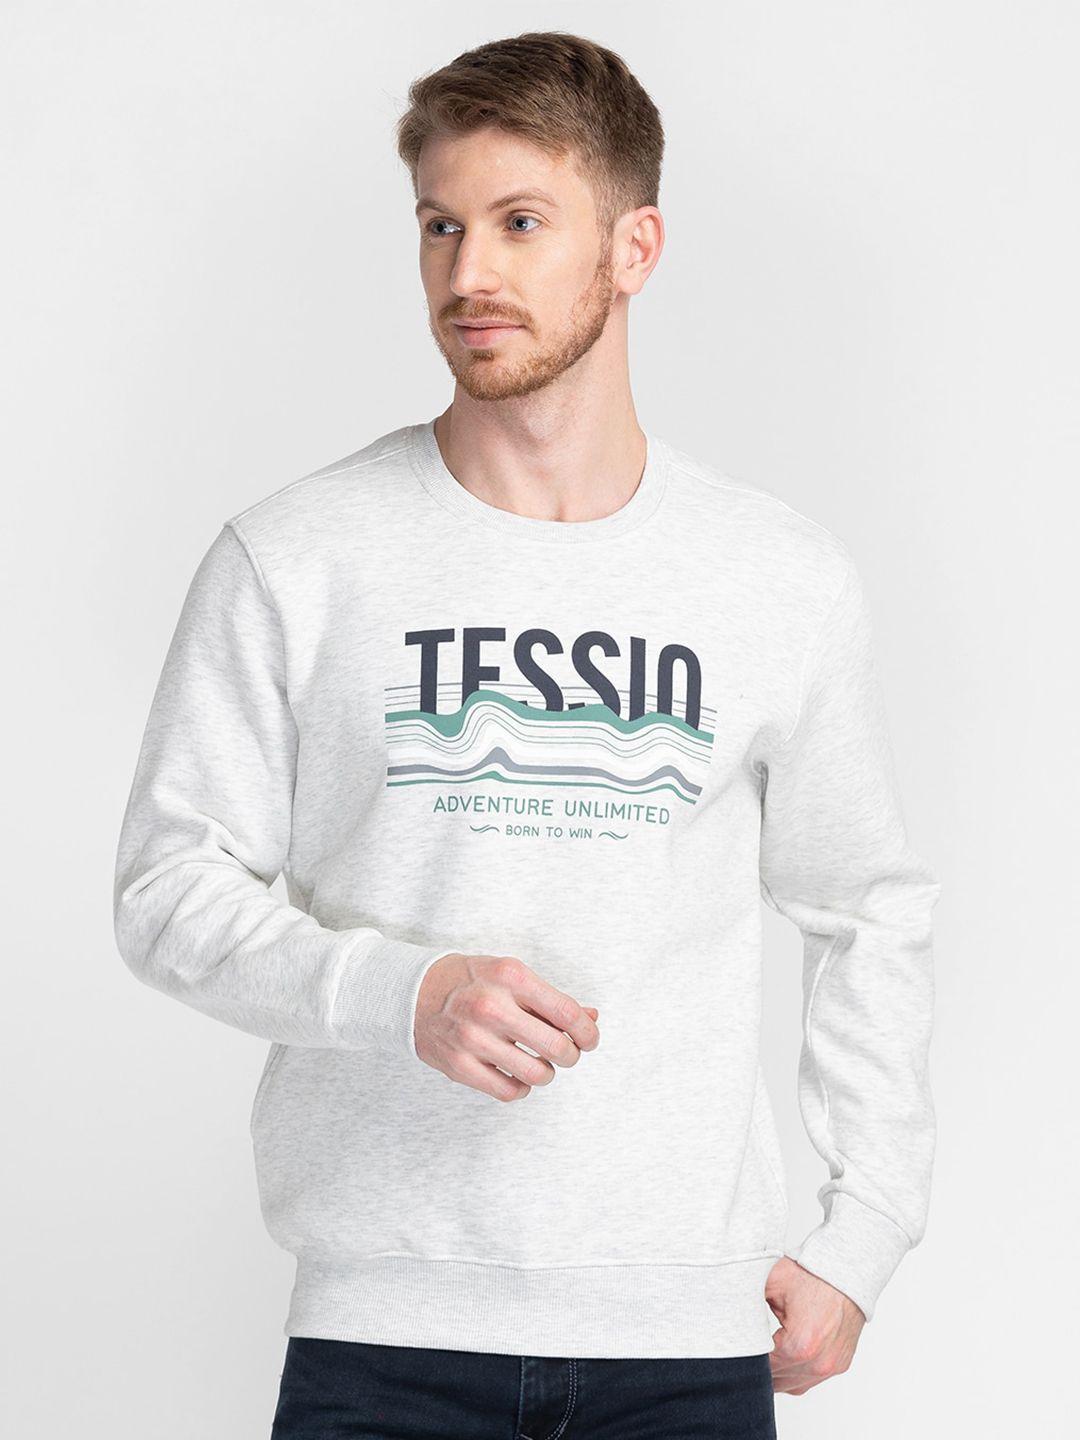 tessio-men-cream-coloured-printed-sweatshirt